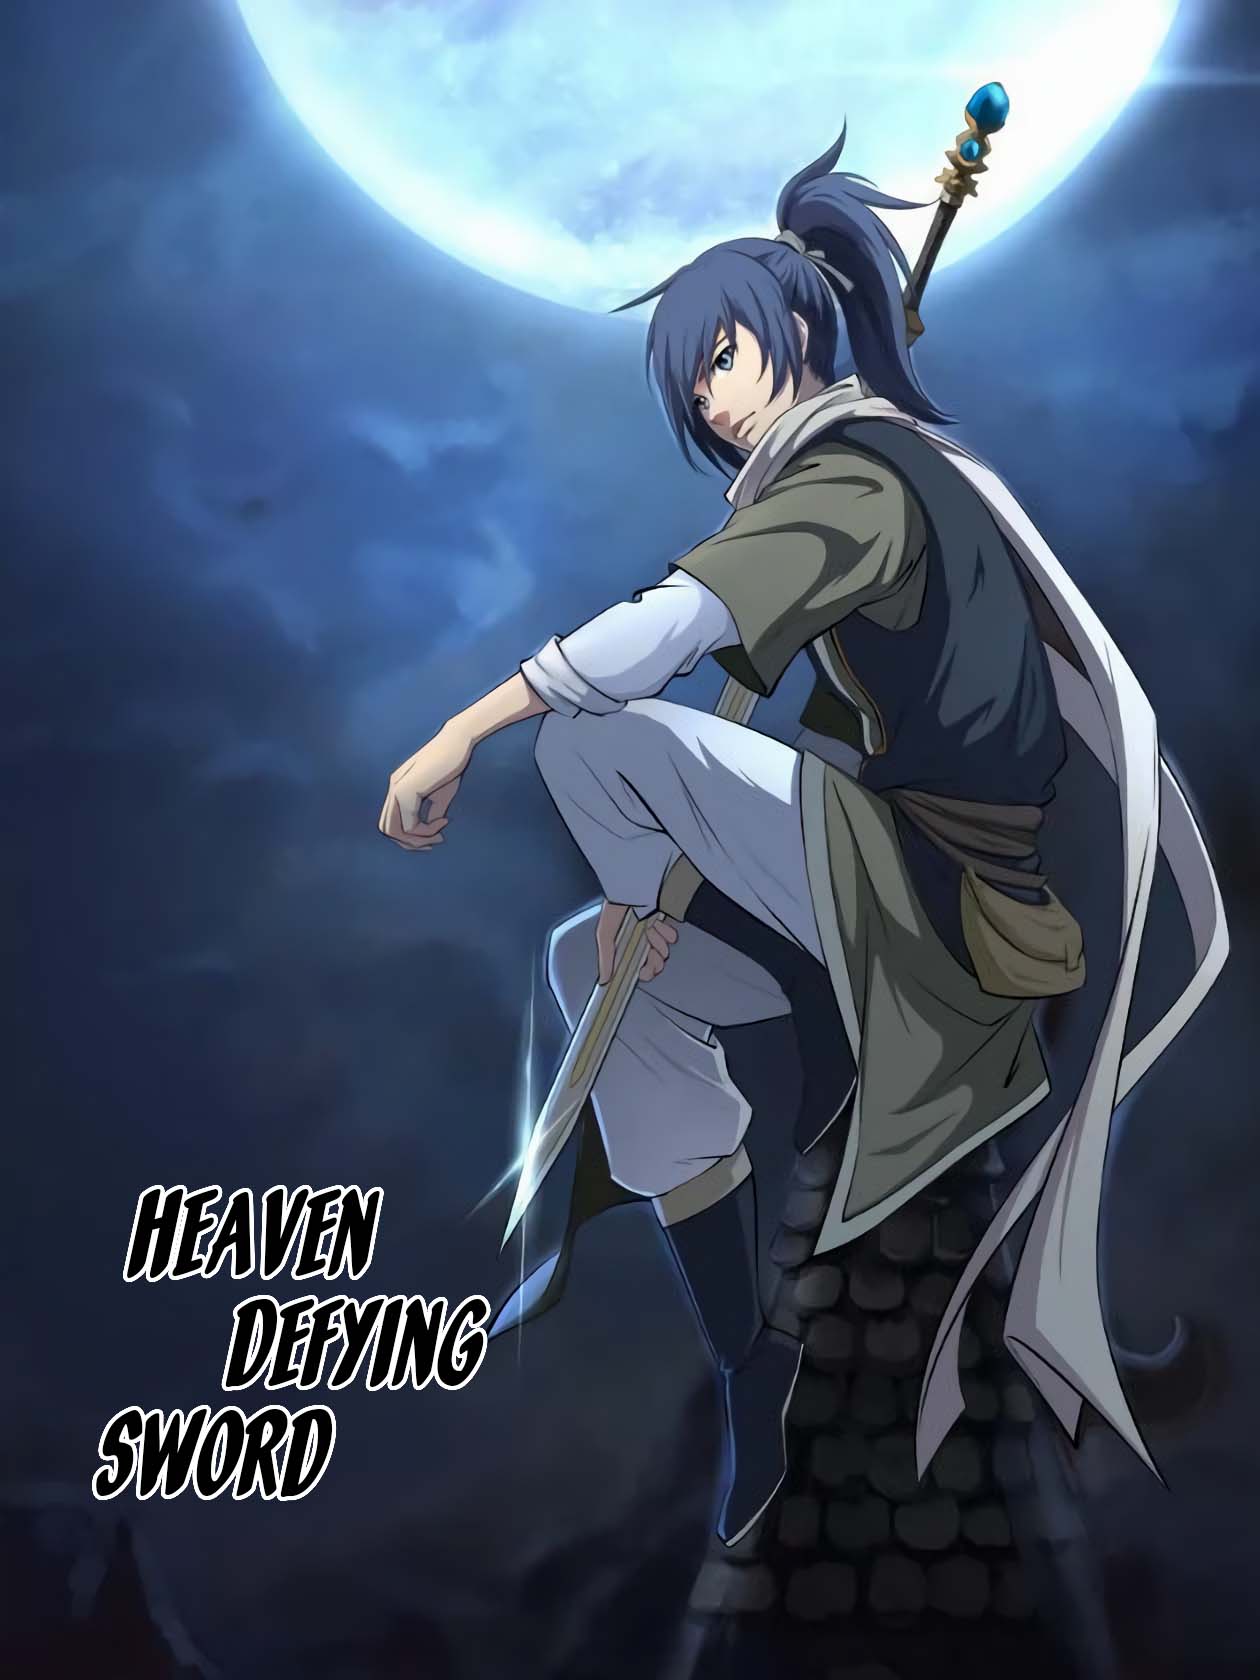 Heaven Defying Sword Cover Image